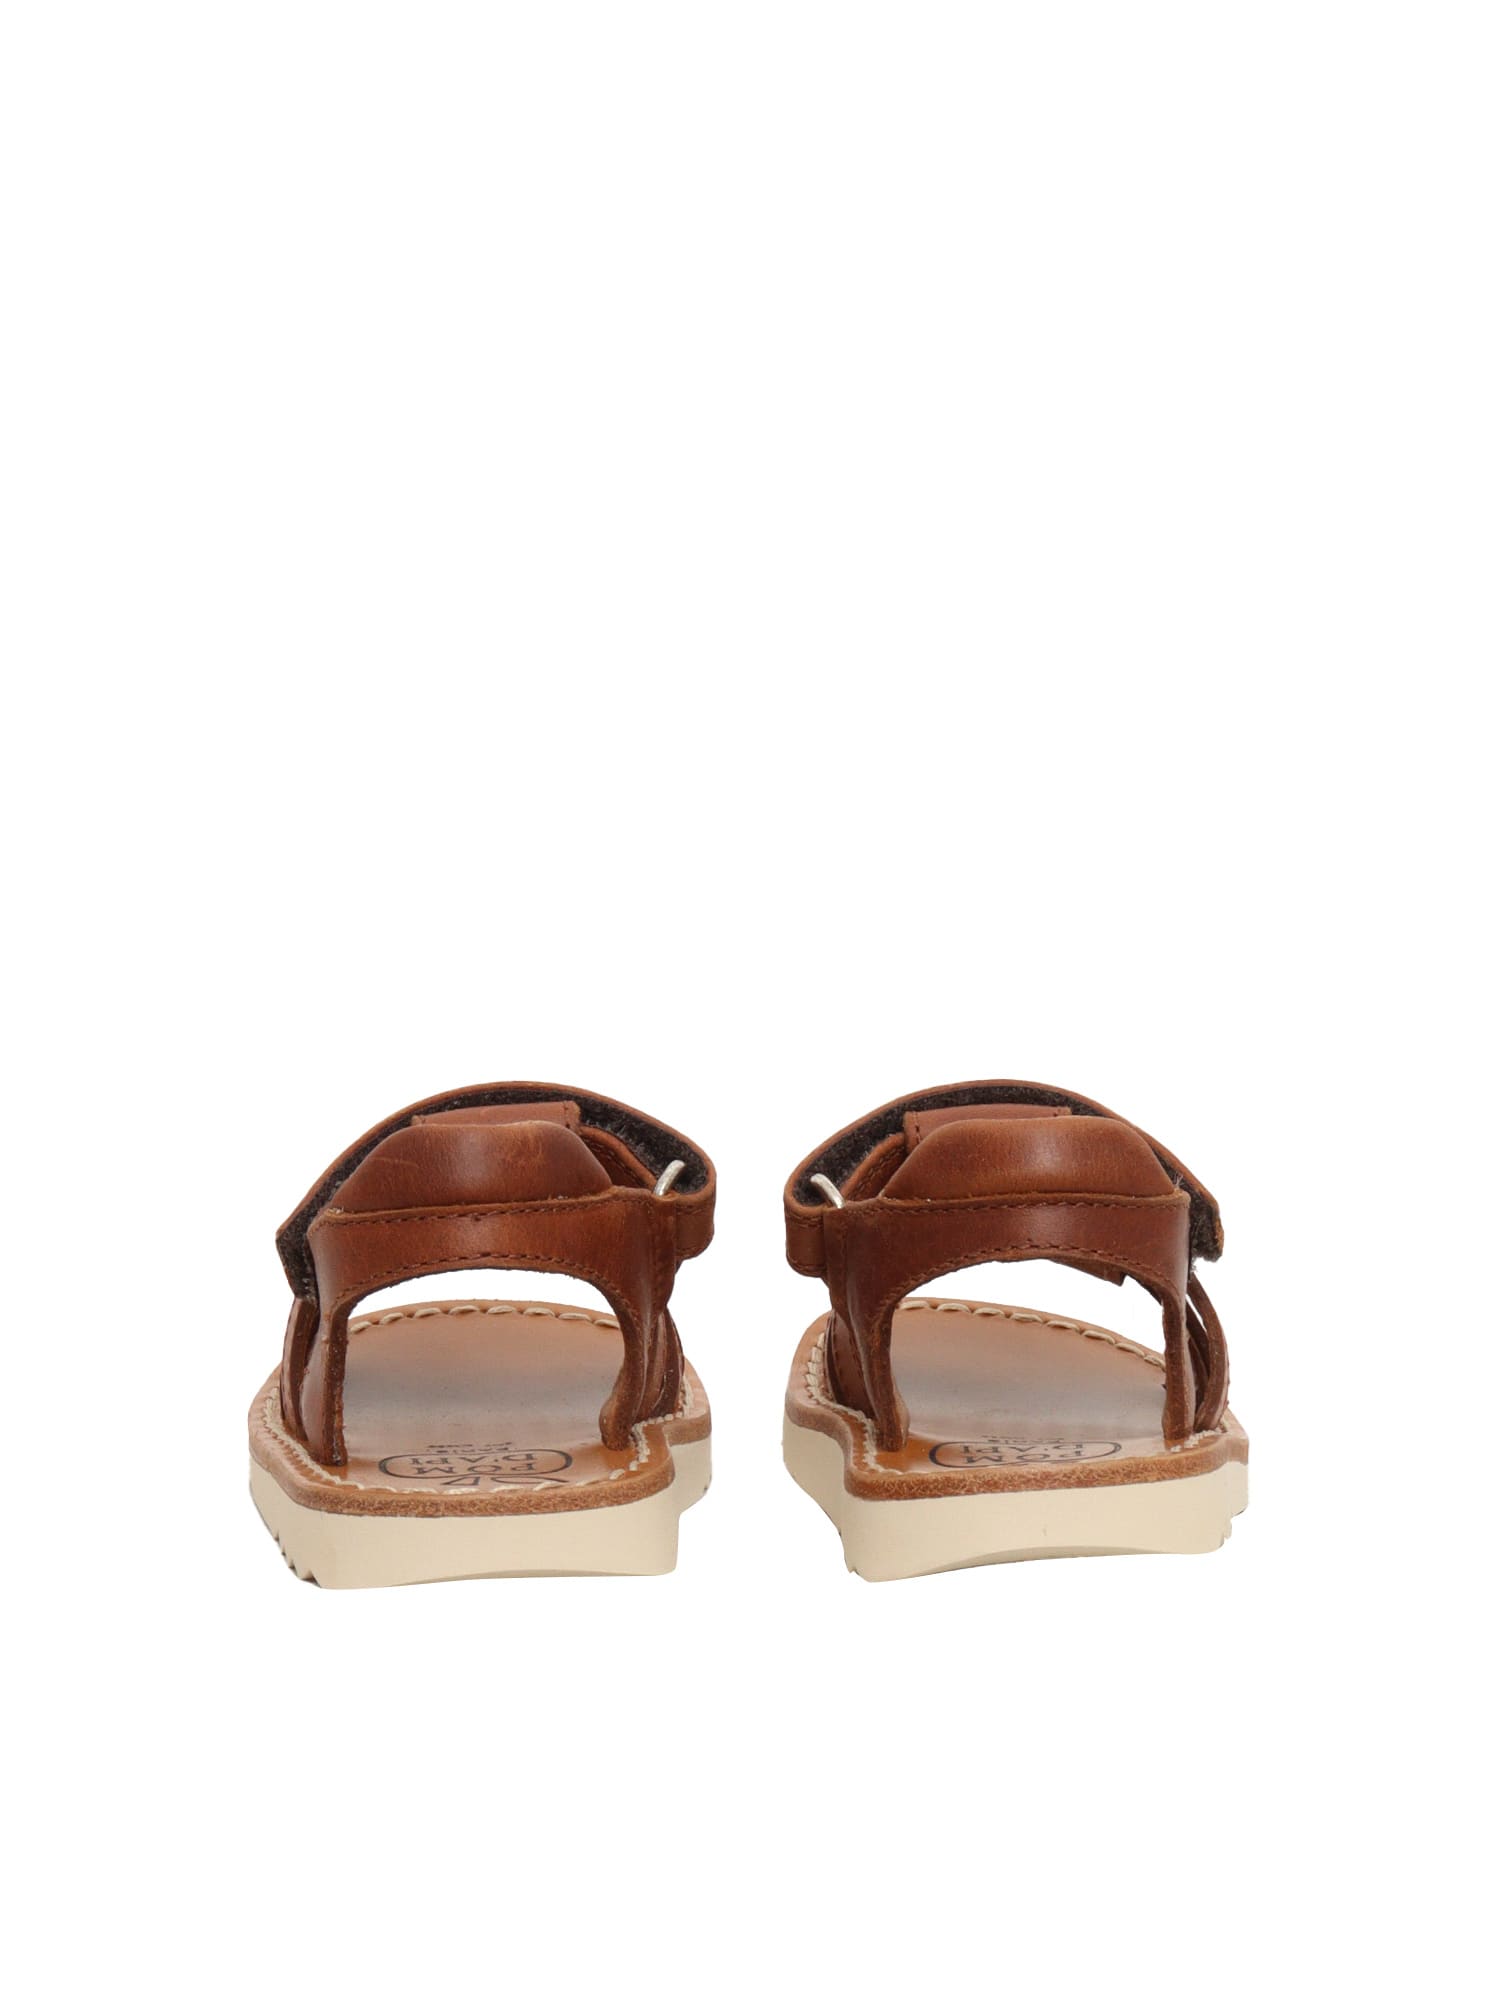 Shop Pom D'api Leather Spider Sandals. In Brown